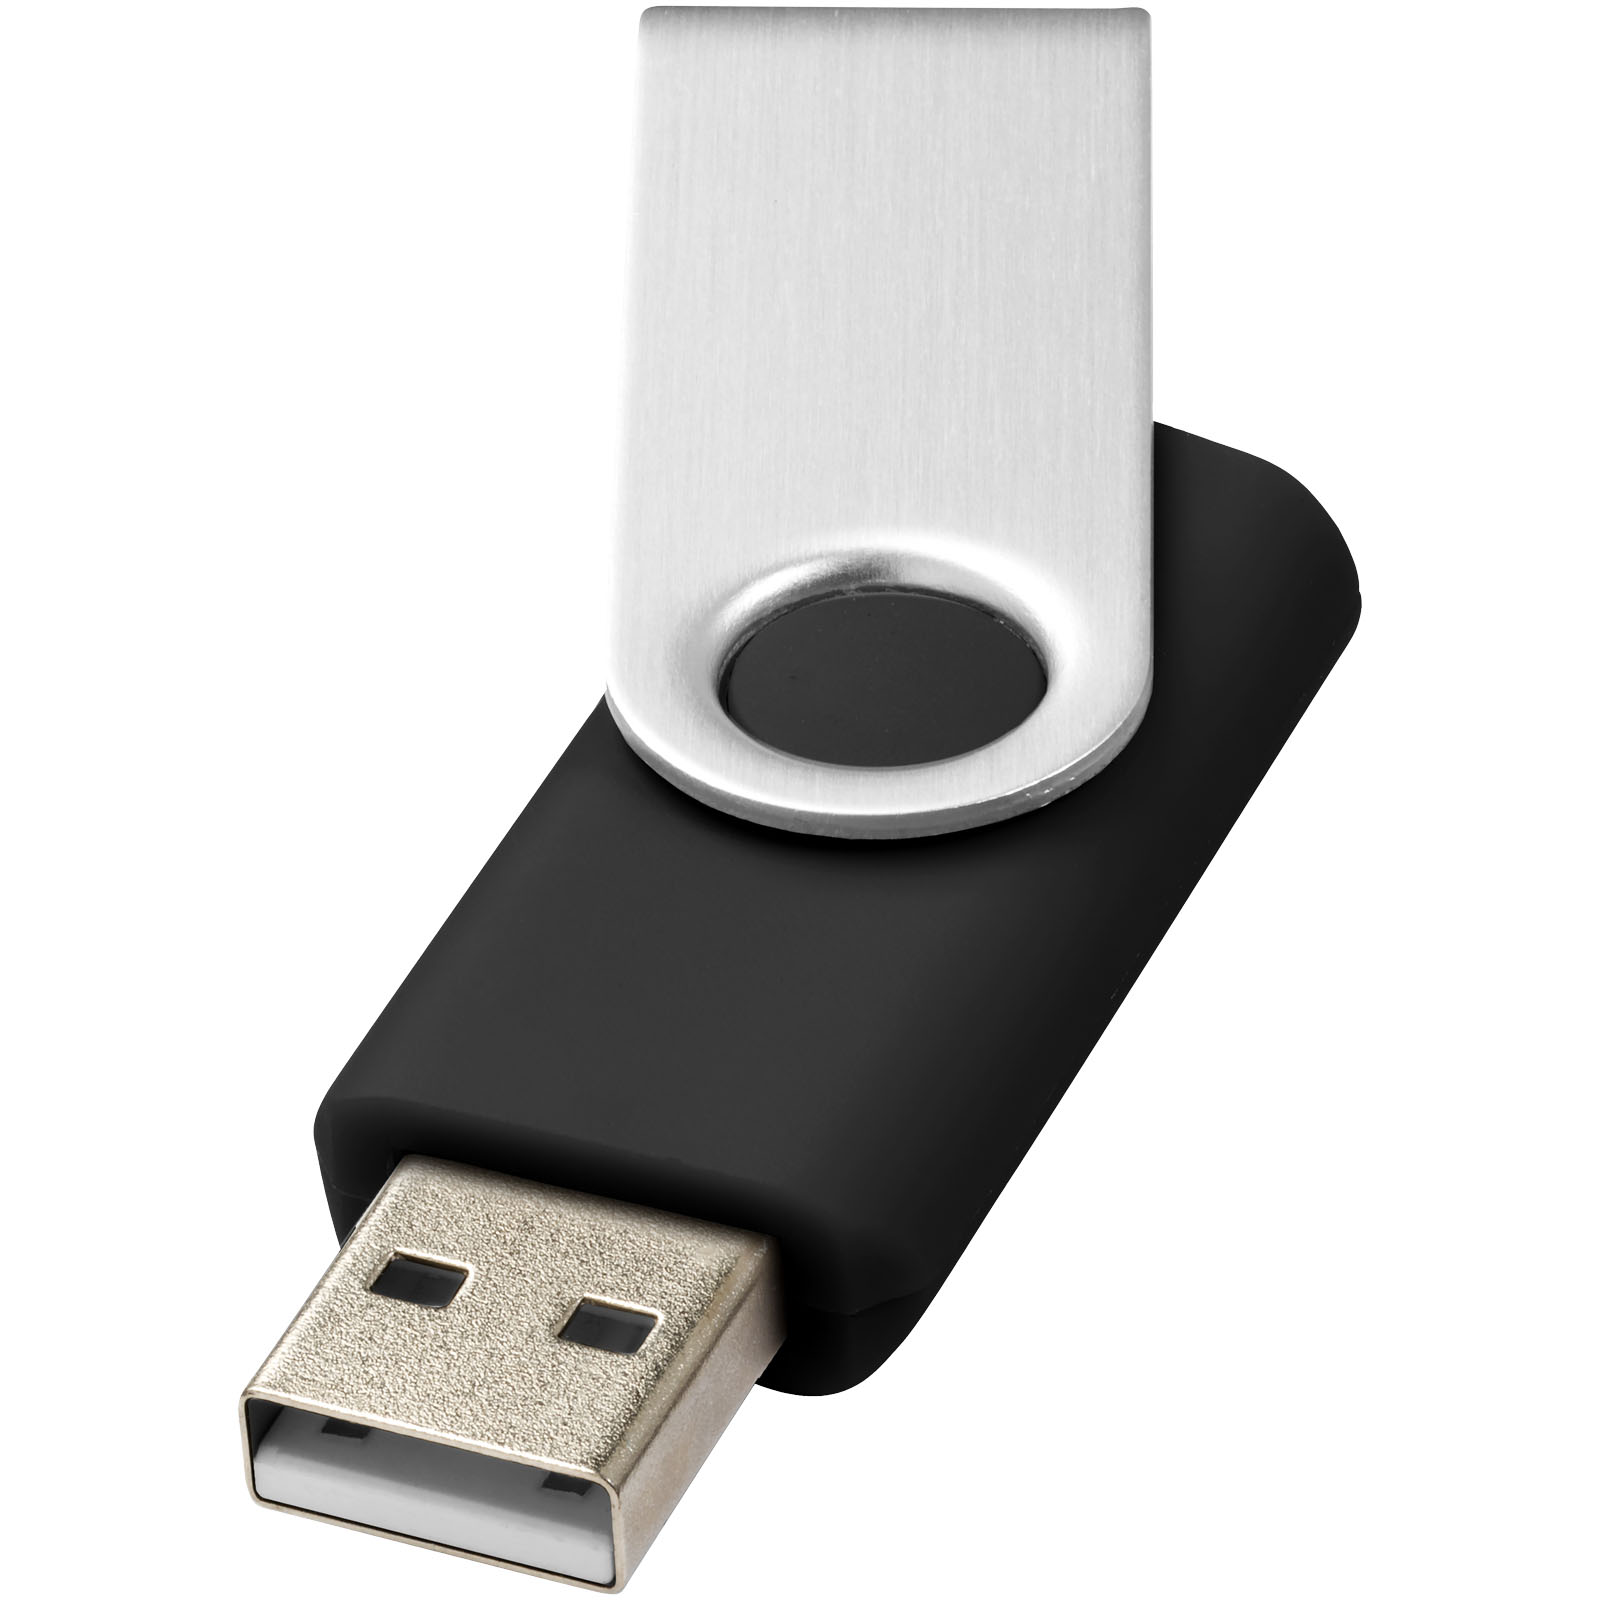 Drehbarer USB-Stick - Bergheim